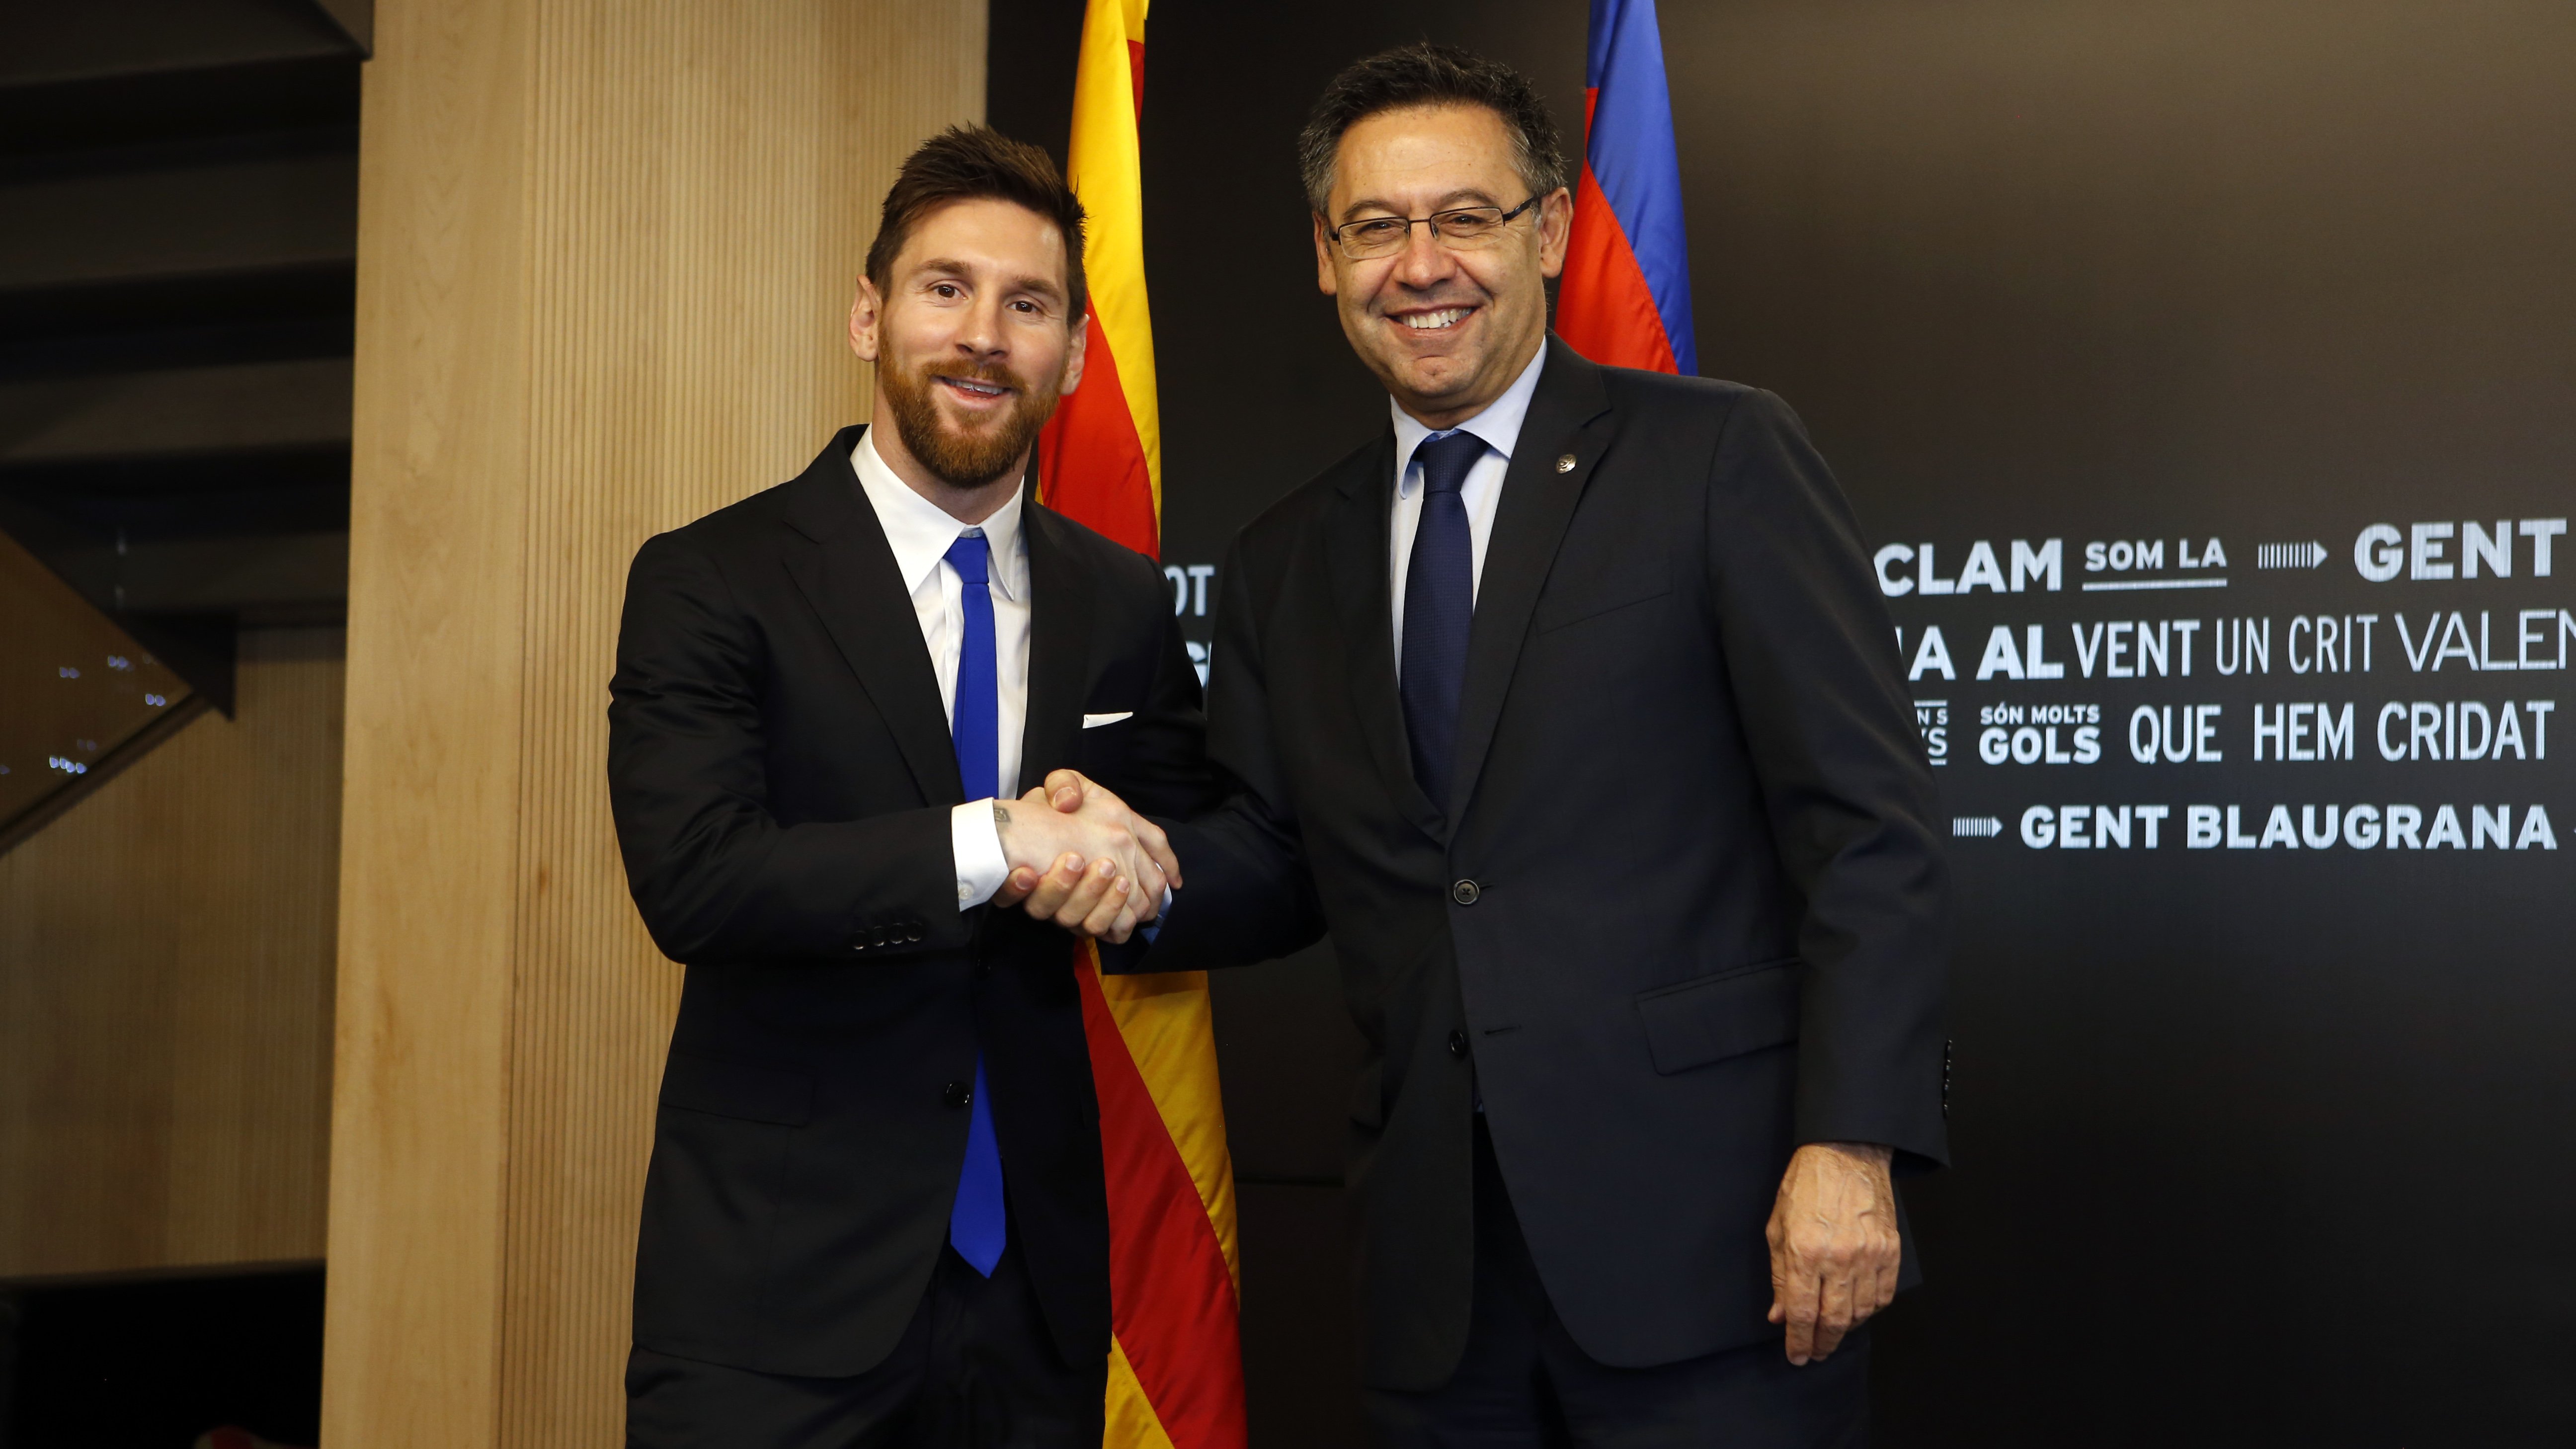 La directiva del Barça, reunida para decidir sobre el futuro del club